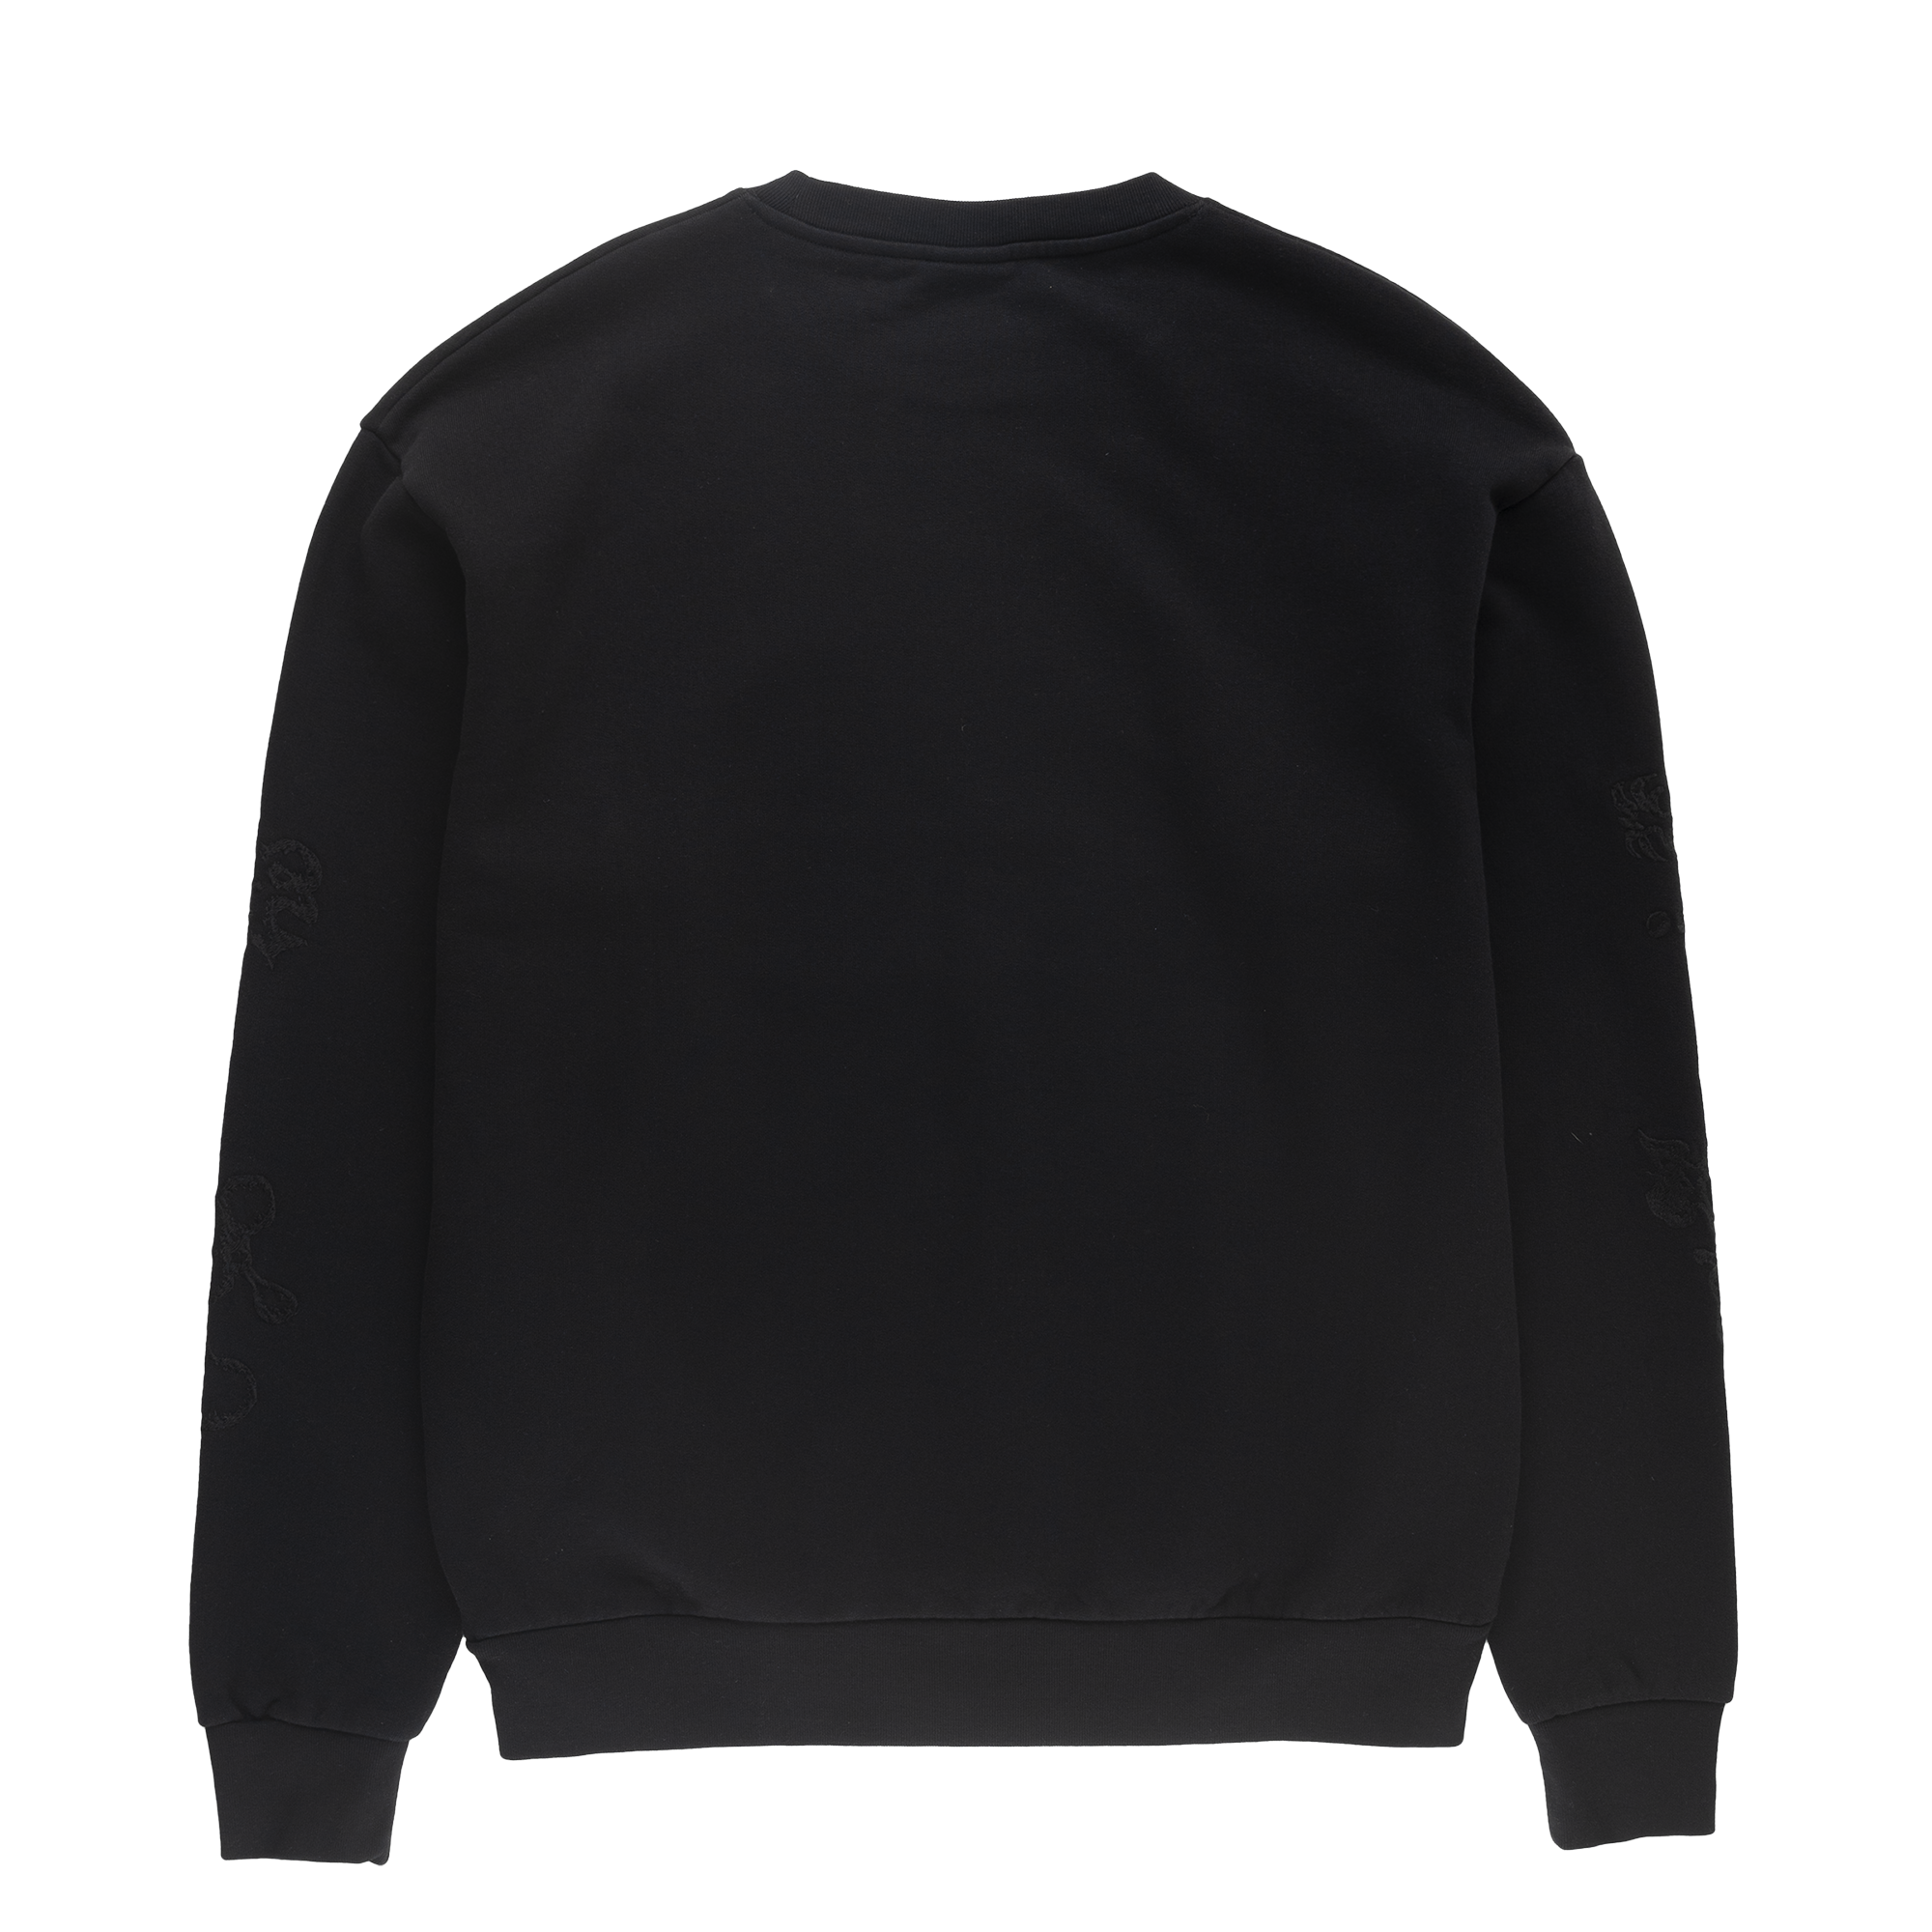 NTS RADIO - Highsnobiety x NTS Sweatshirt - Black